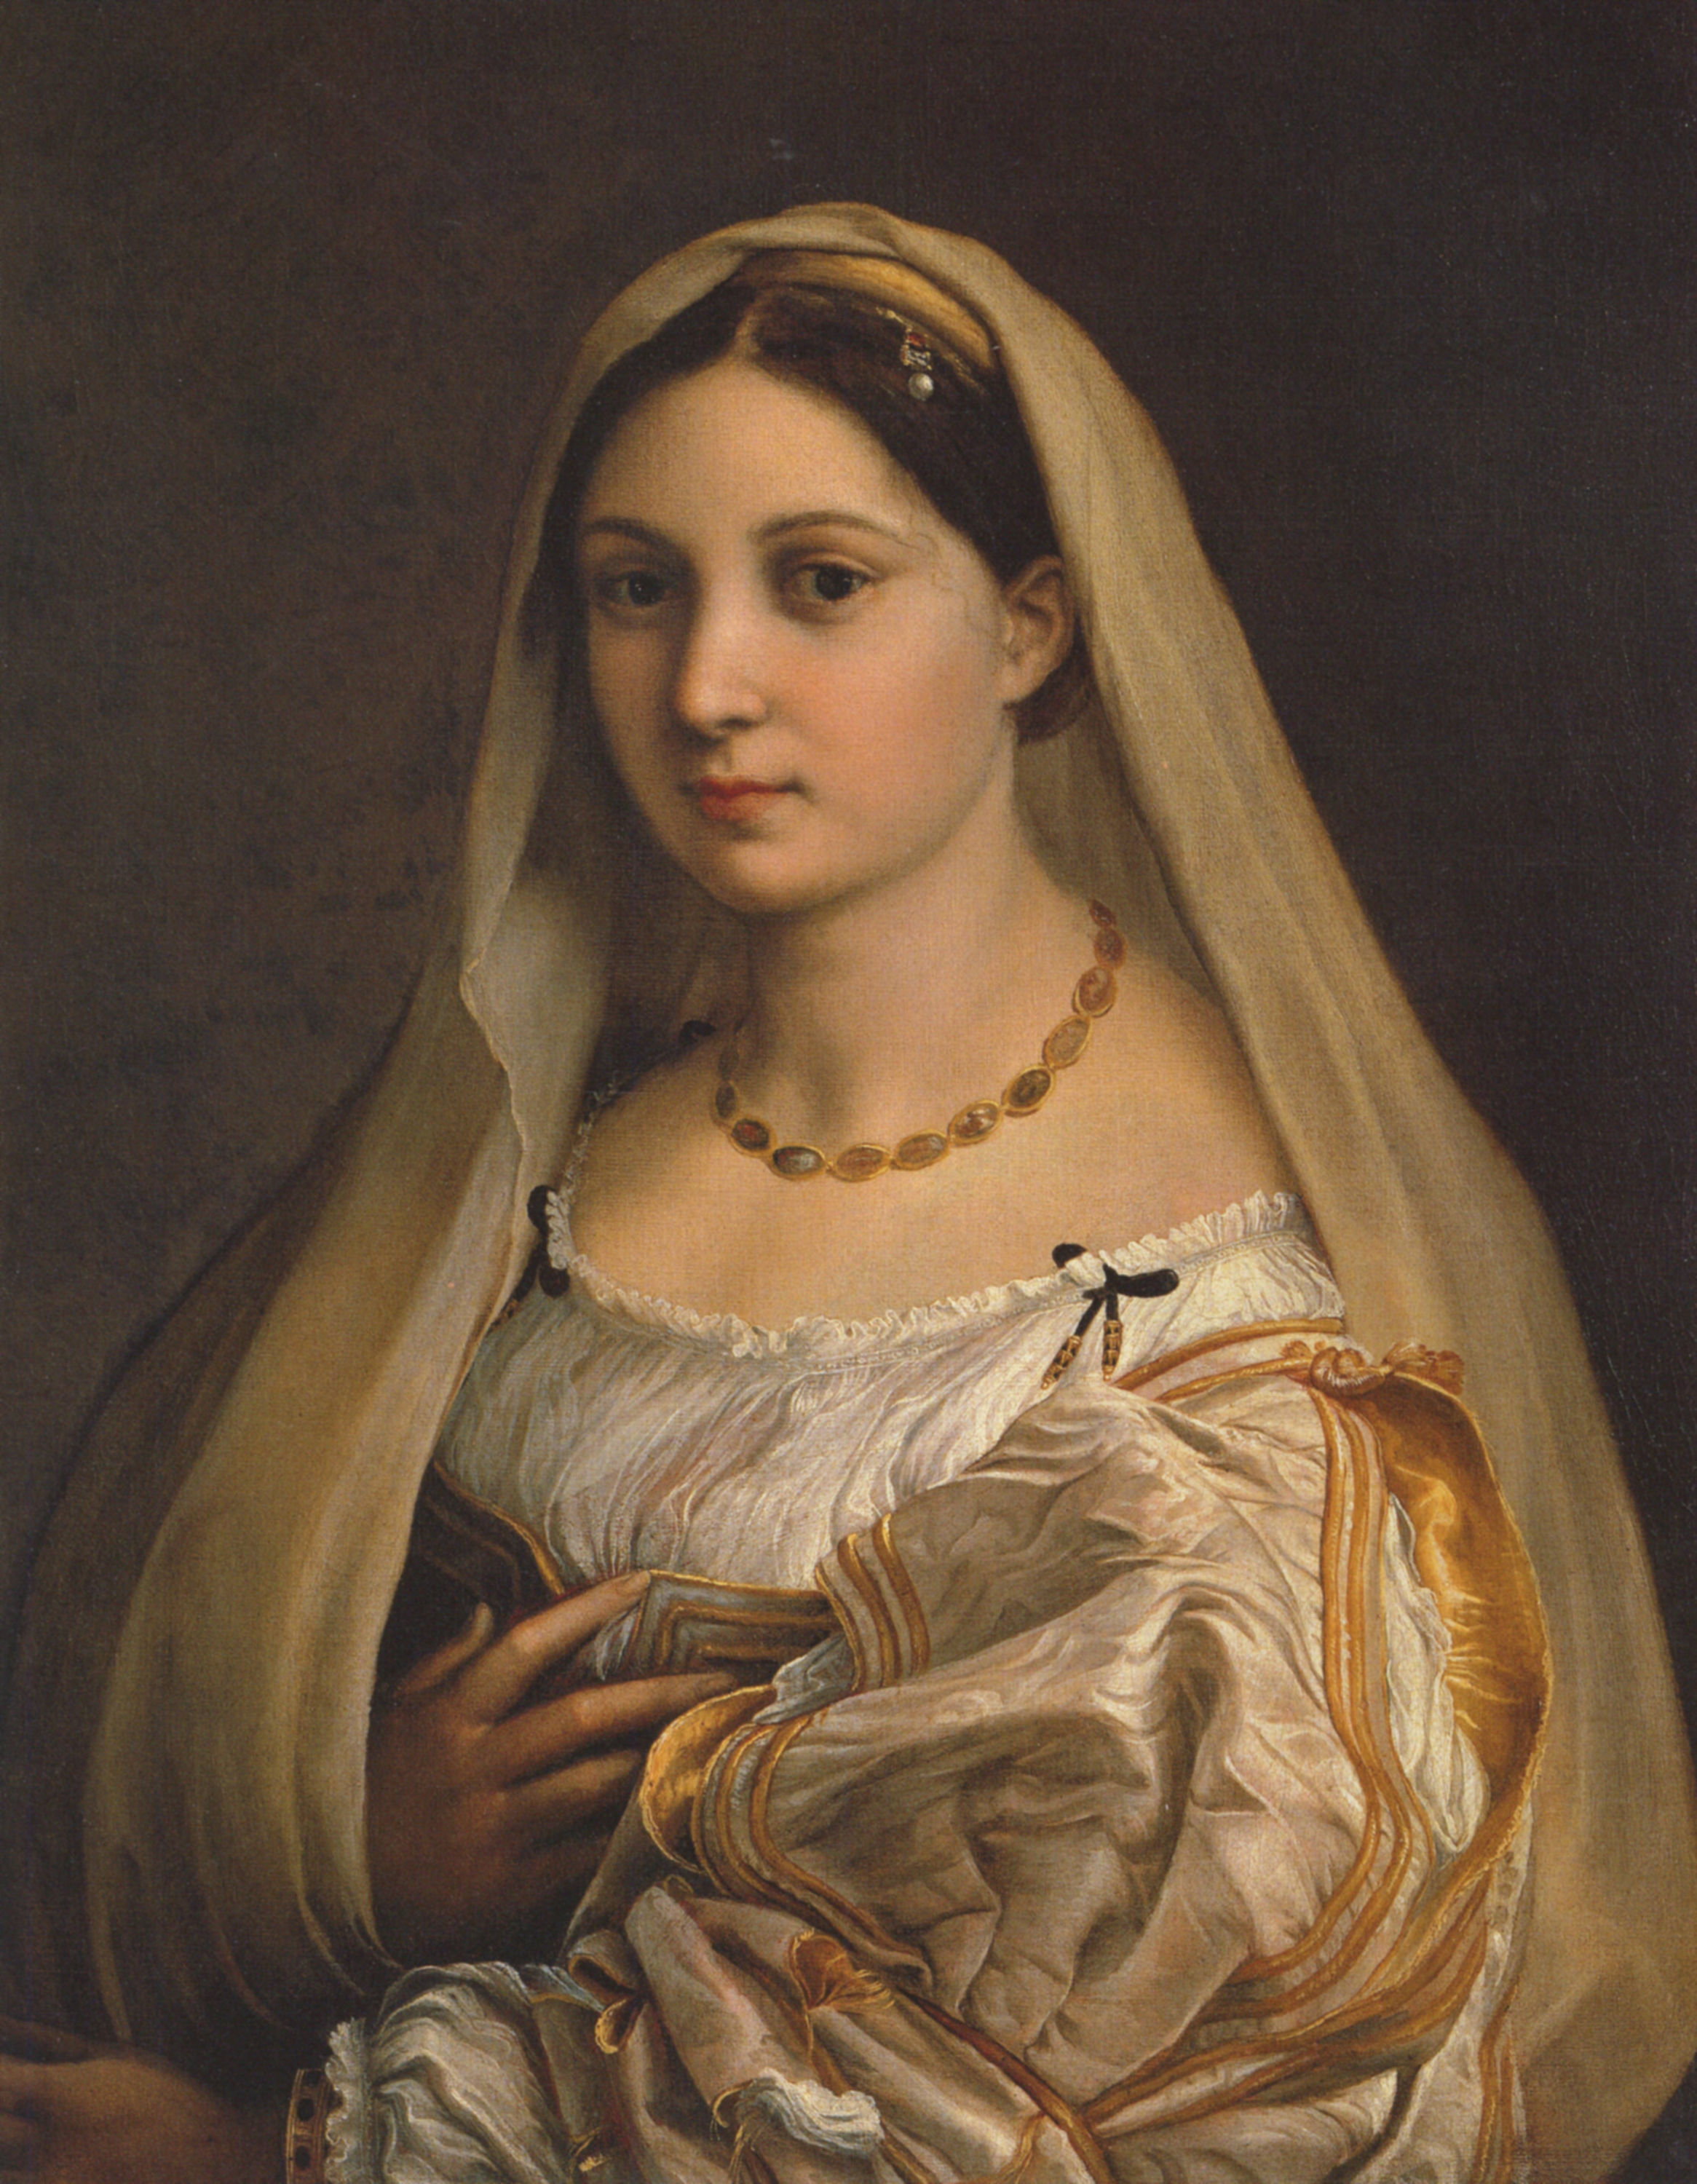 La Donna Velata by Raphael